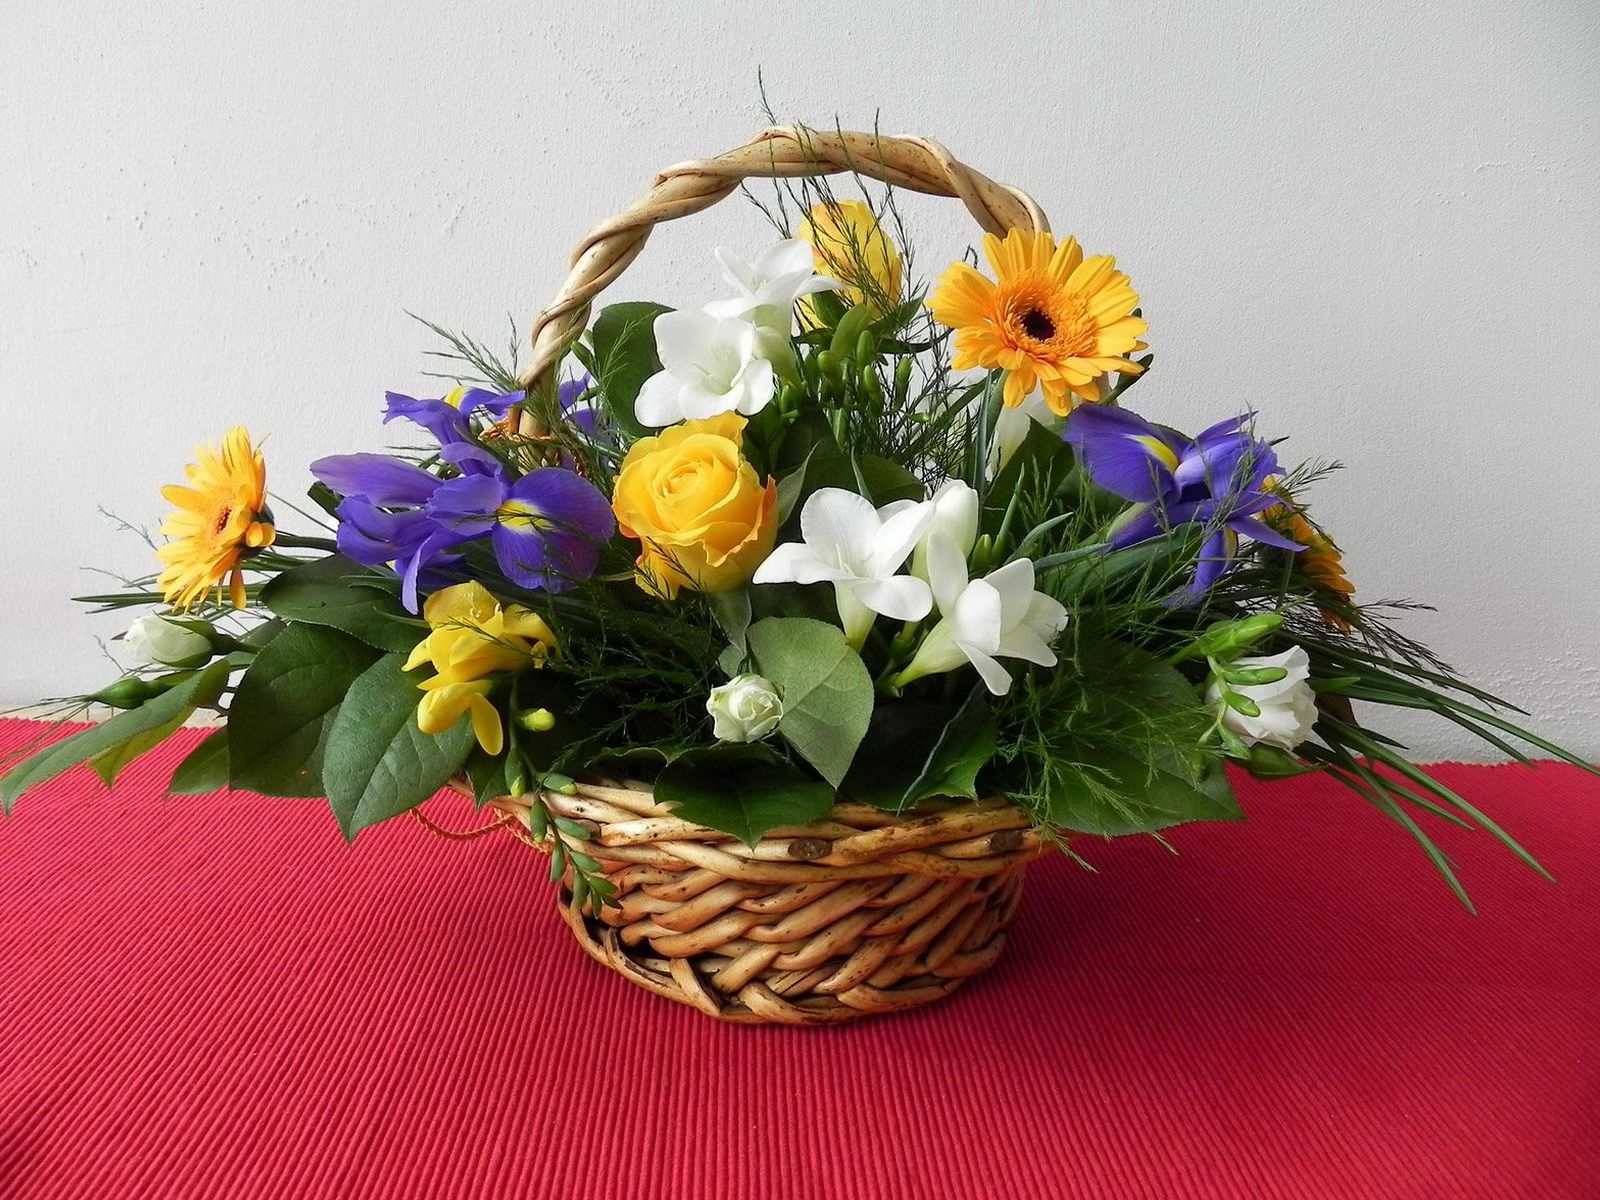 flowers, roses, leaves, gerberas, basket, composition, irises, lukoshko